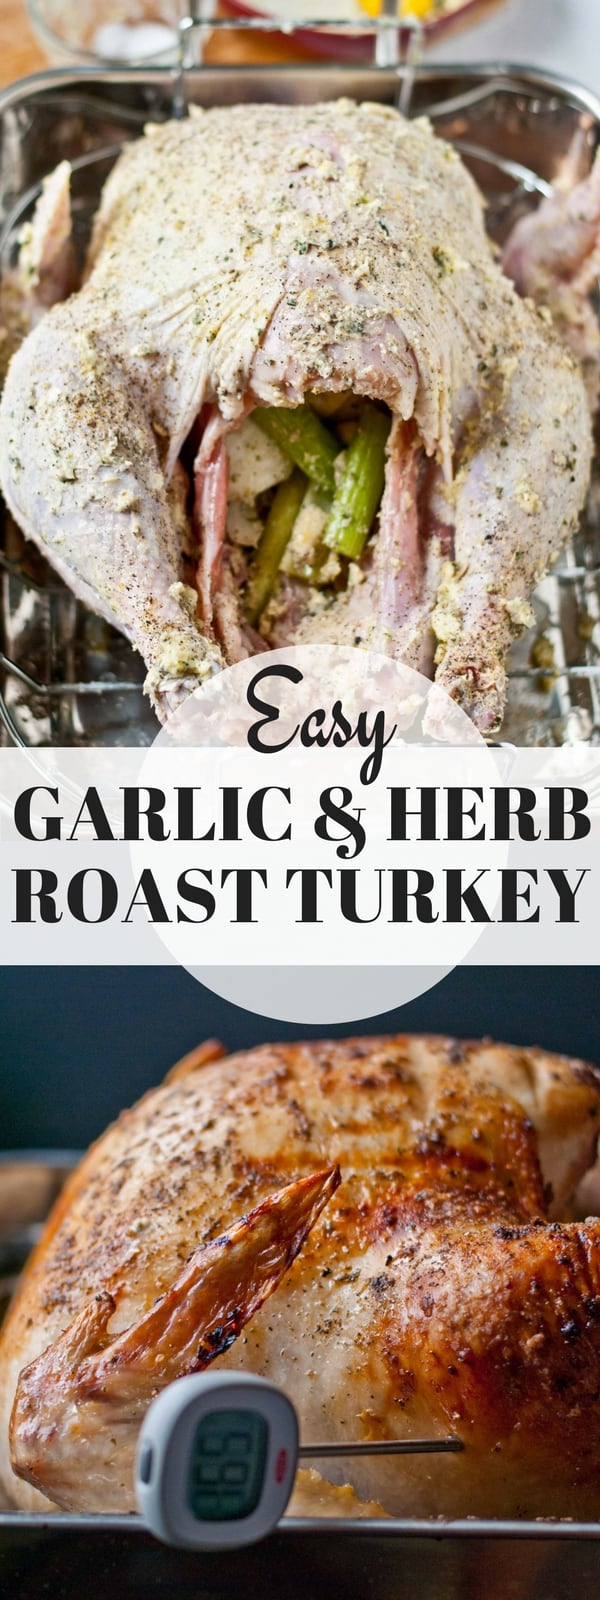 Thanksgiving turkey recipes: Easy Garlic and Herb Roasted Turkey